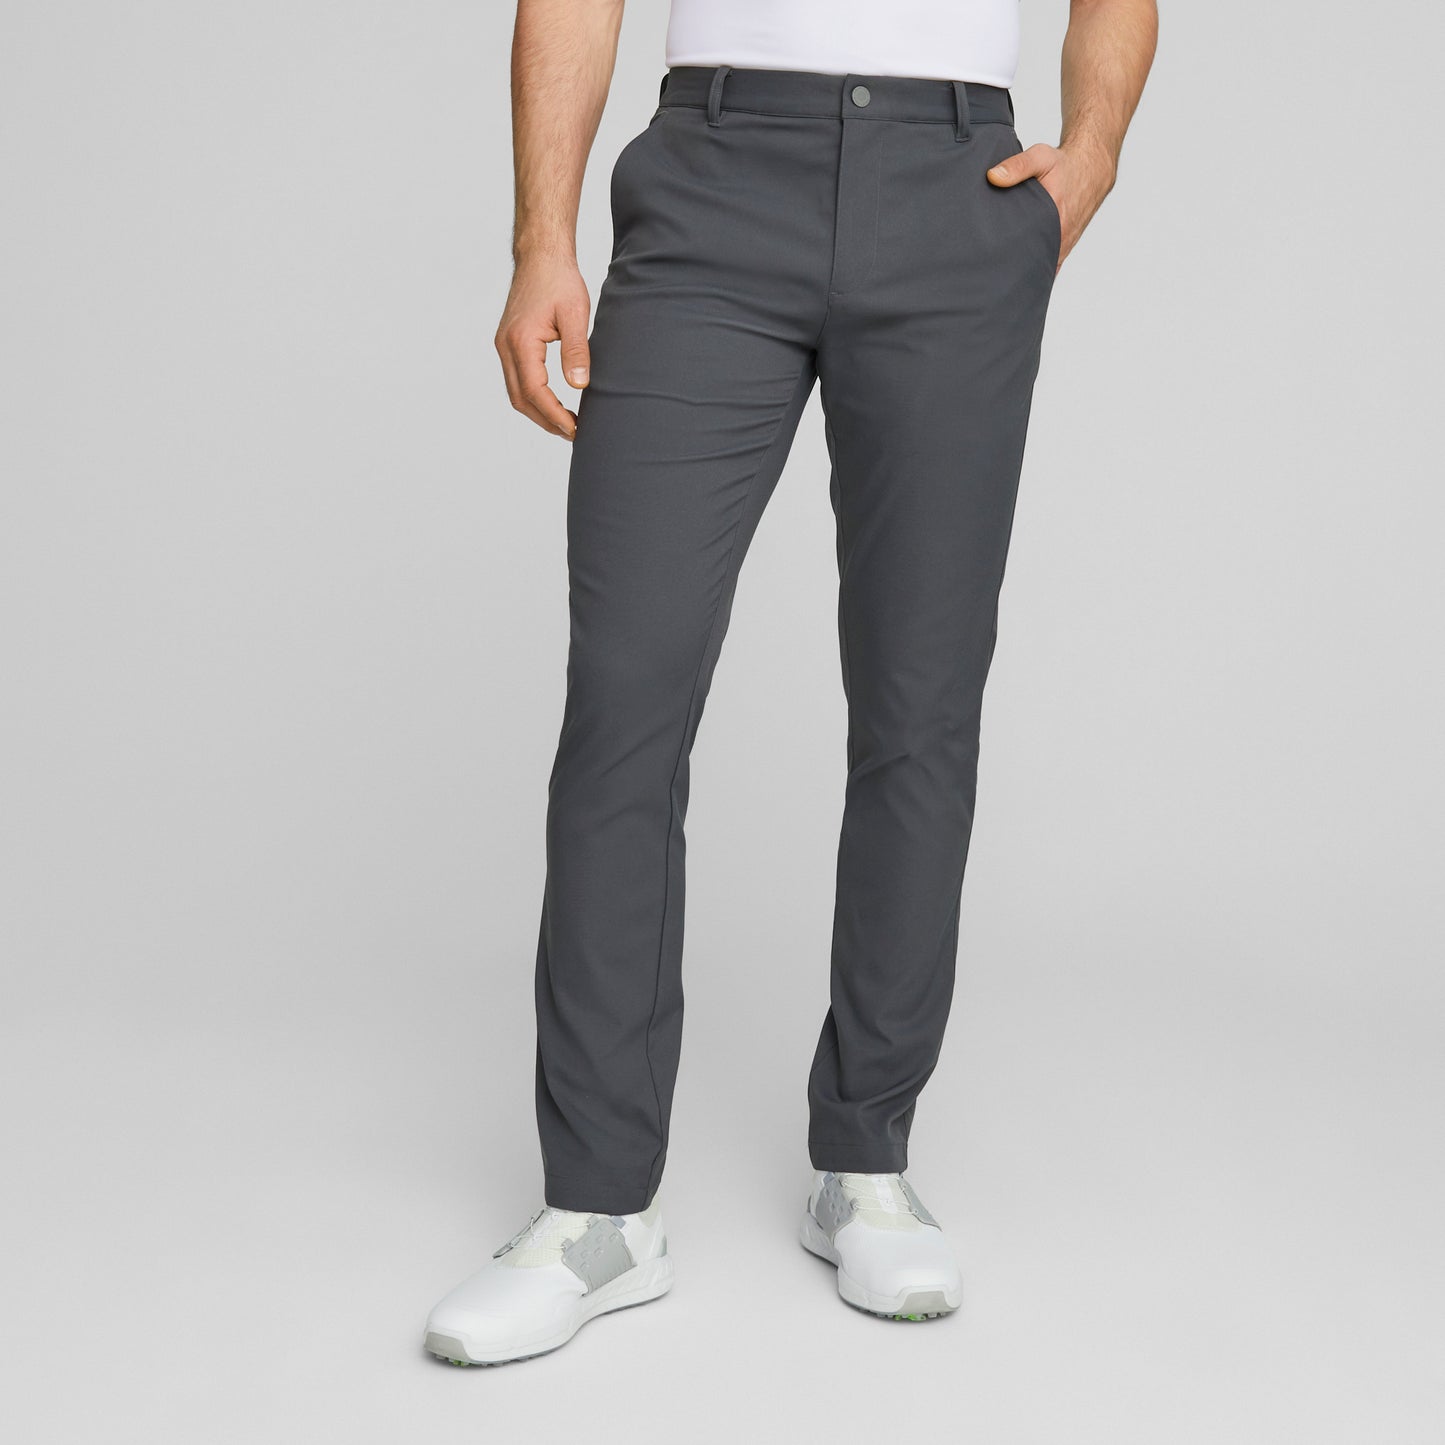 PUMA Jackpot 5 Pocket Golf Pants 2020 - Walmart.com